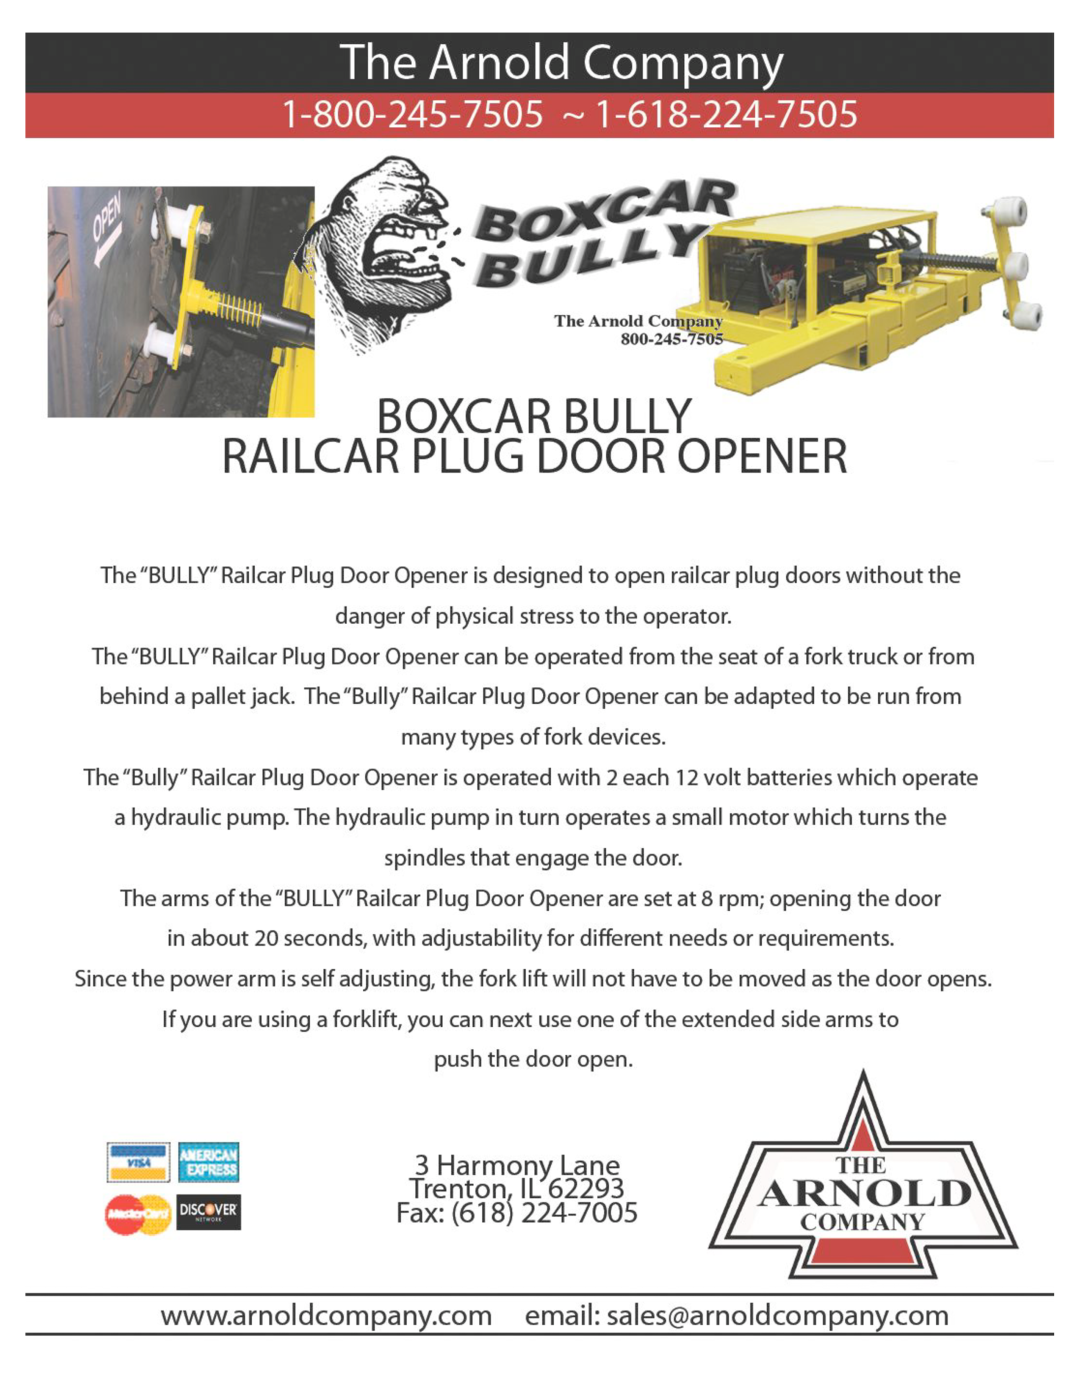 Arnold Company Boxcar Bully Railcar Plug Door Opener manual 